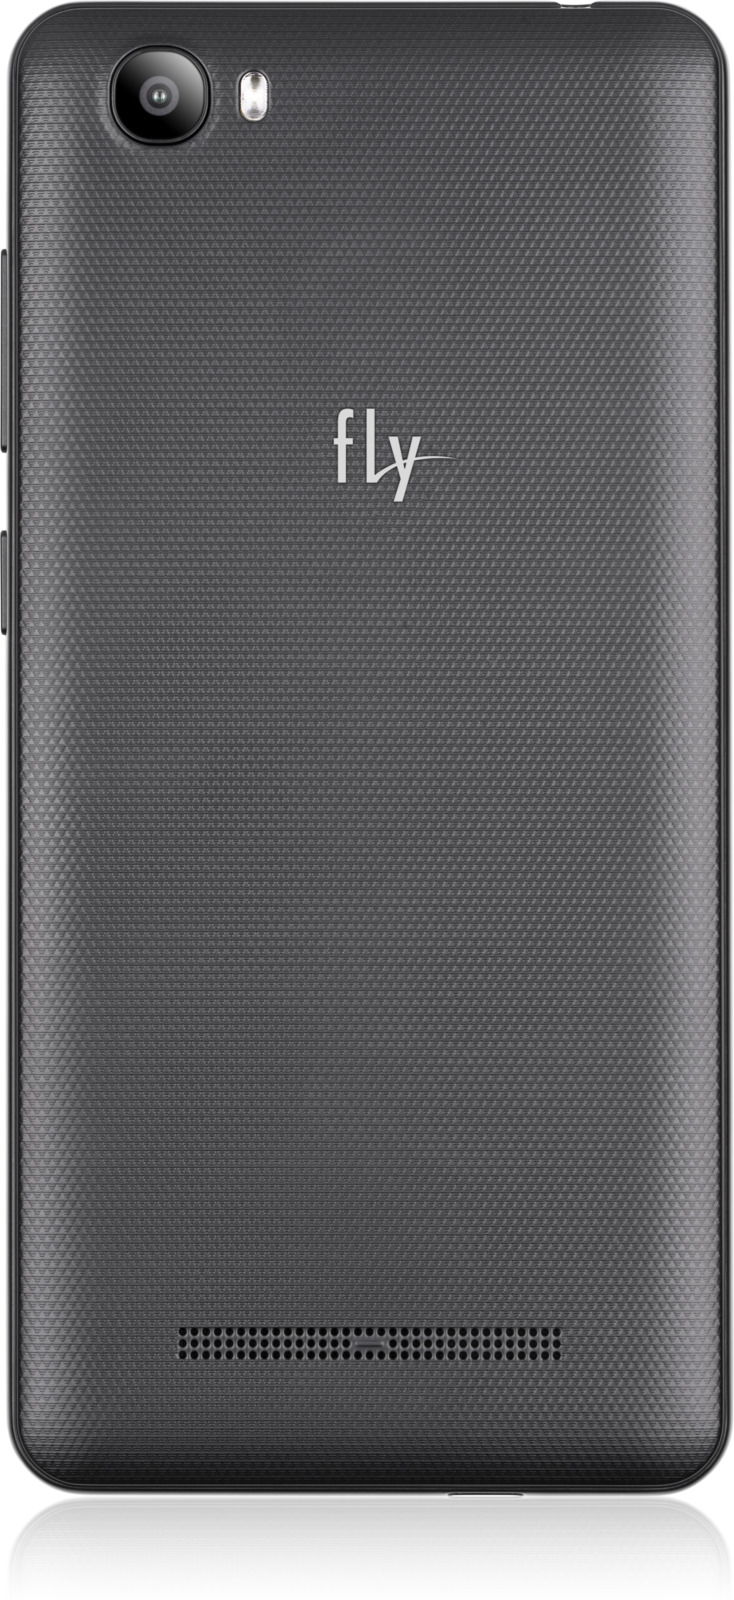 фото Смартфон Fly Life Mega, 8 ГБ, черный Fly mobile